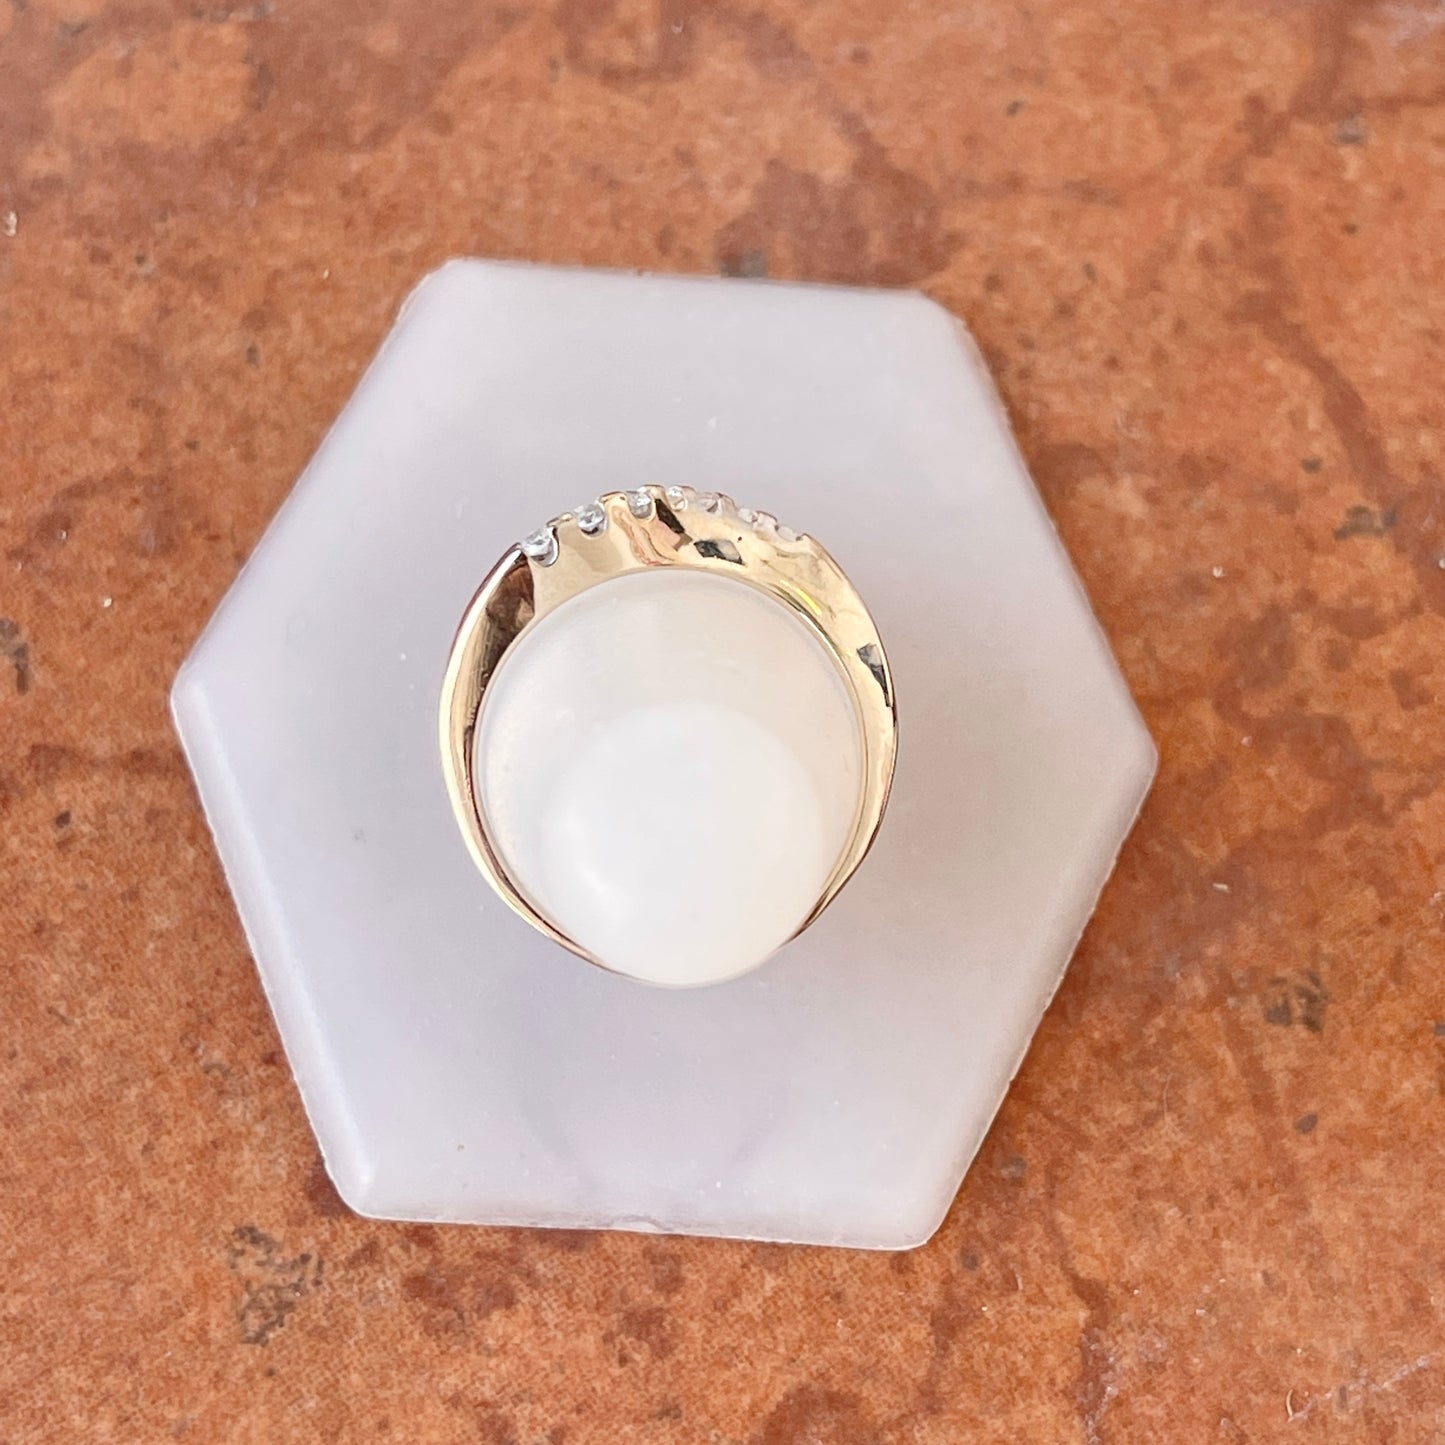 Estate 14KT White Gold Curved Contempo Diamond Ring